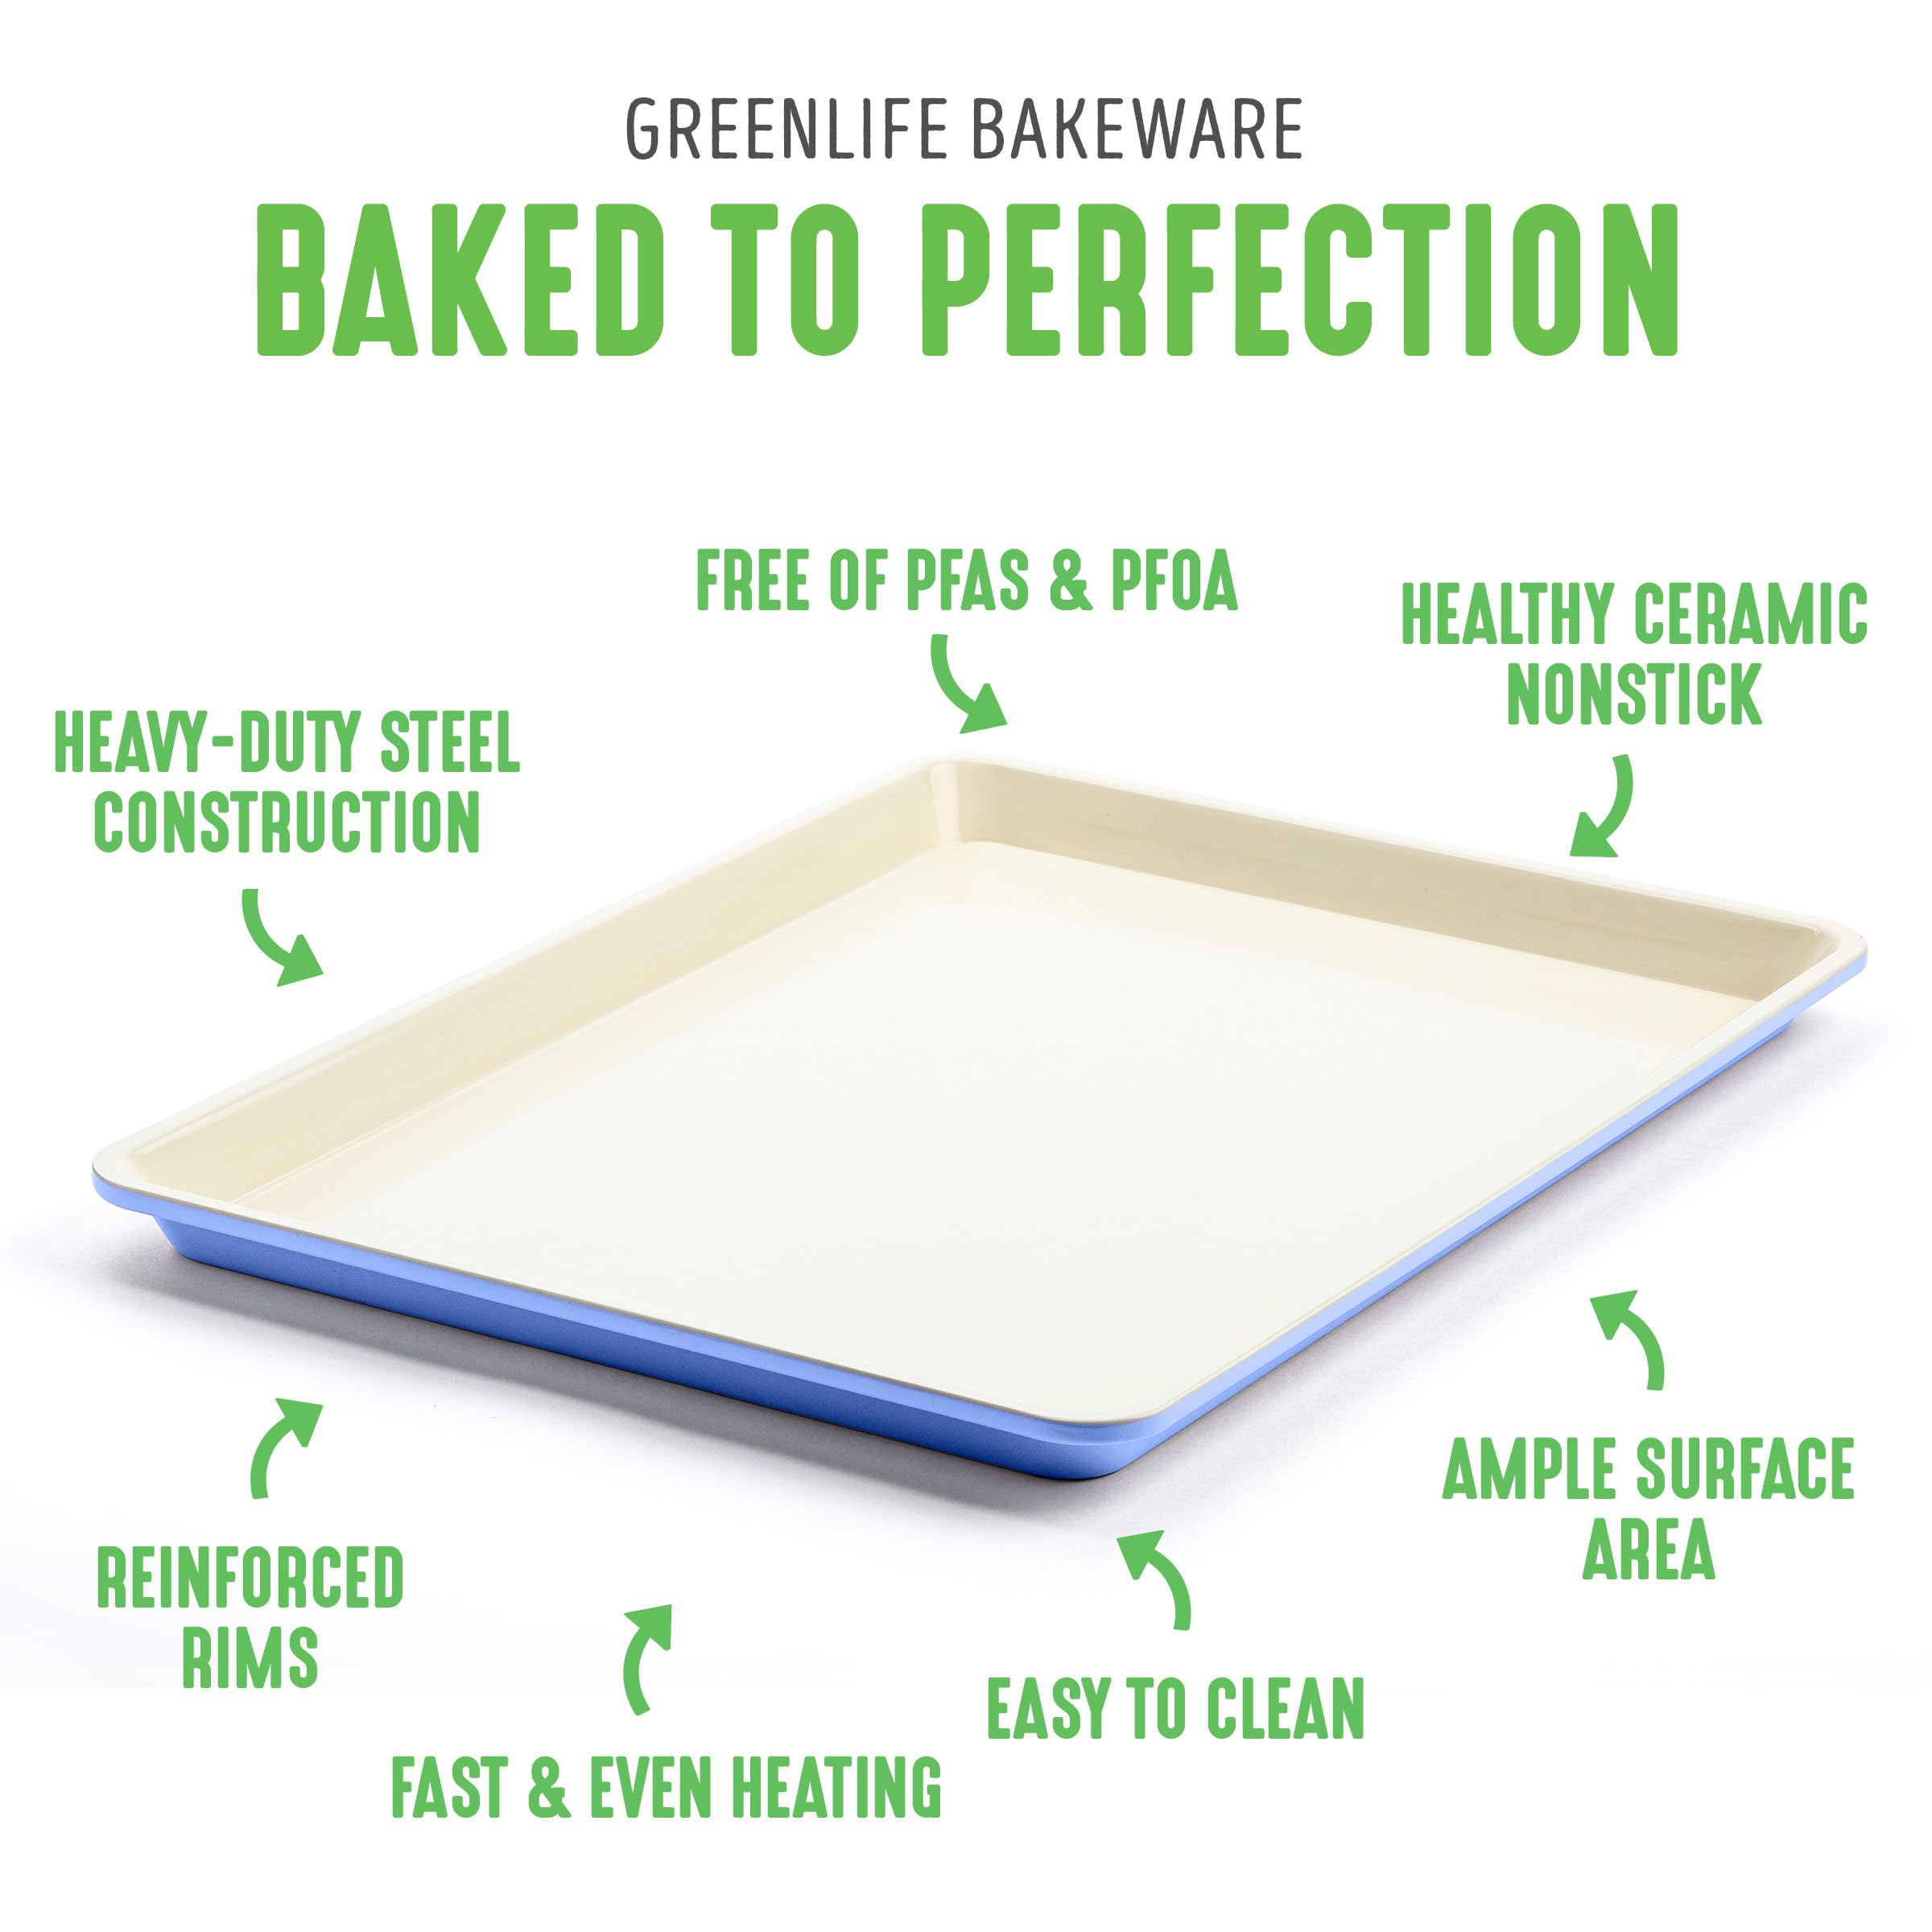 GreenLife Bakeware Healthy Ceramic Nonstick 18.5